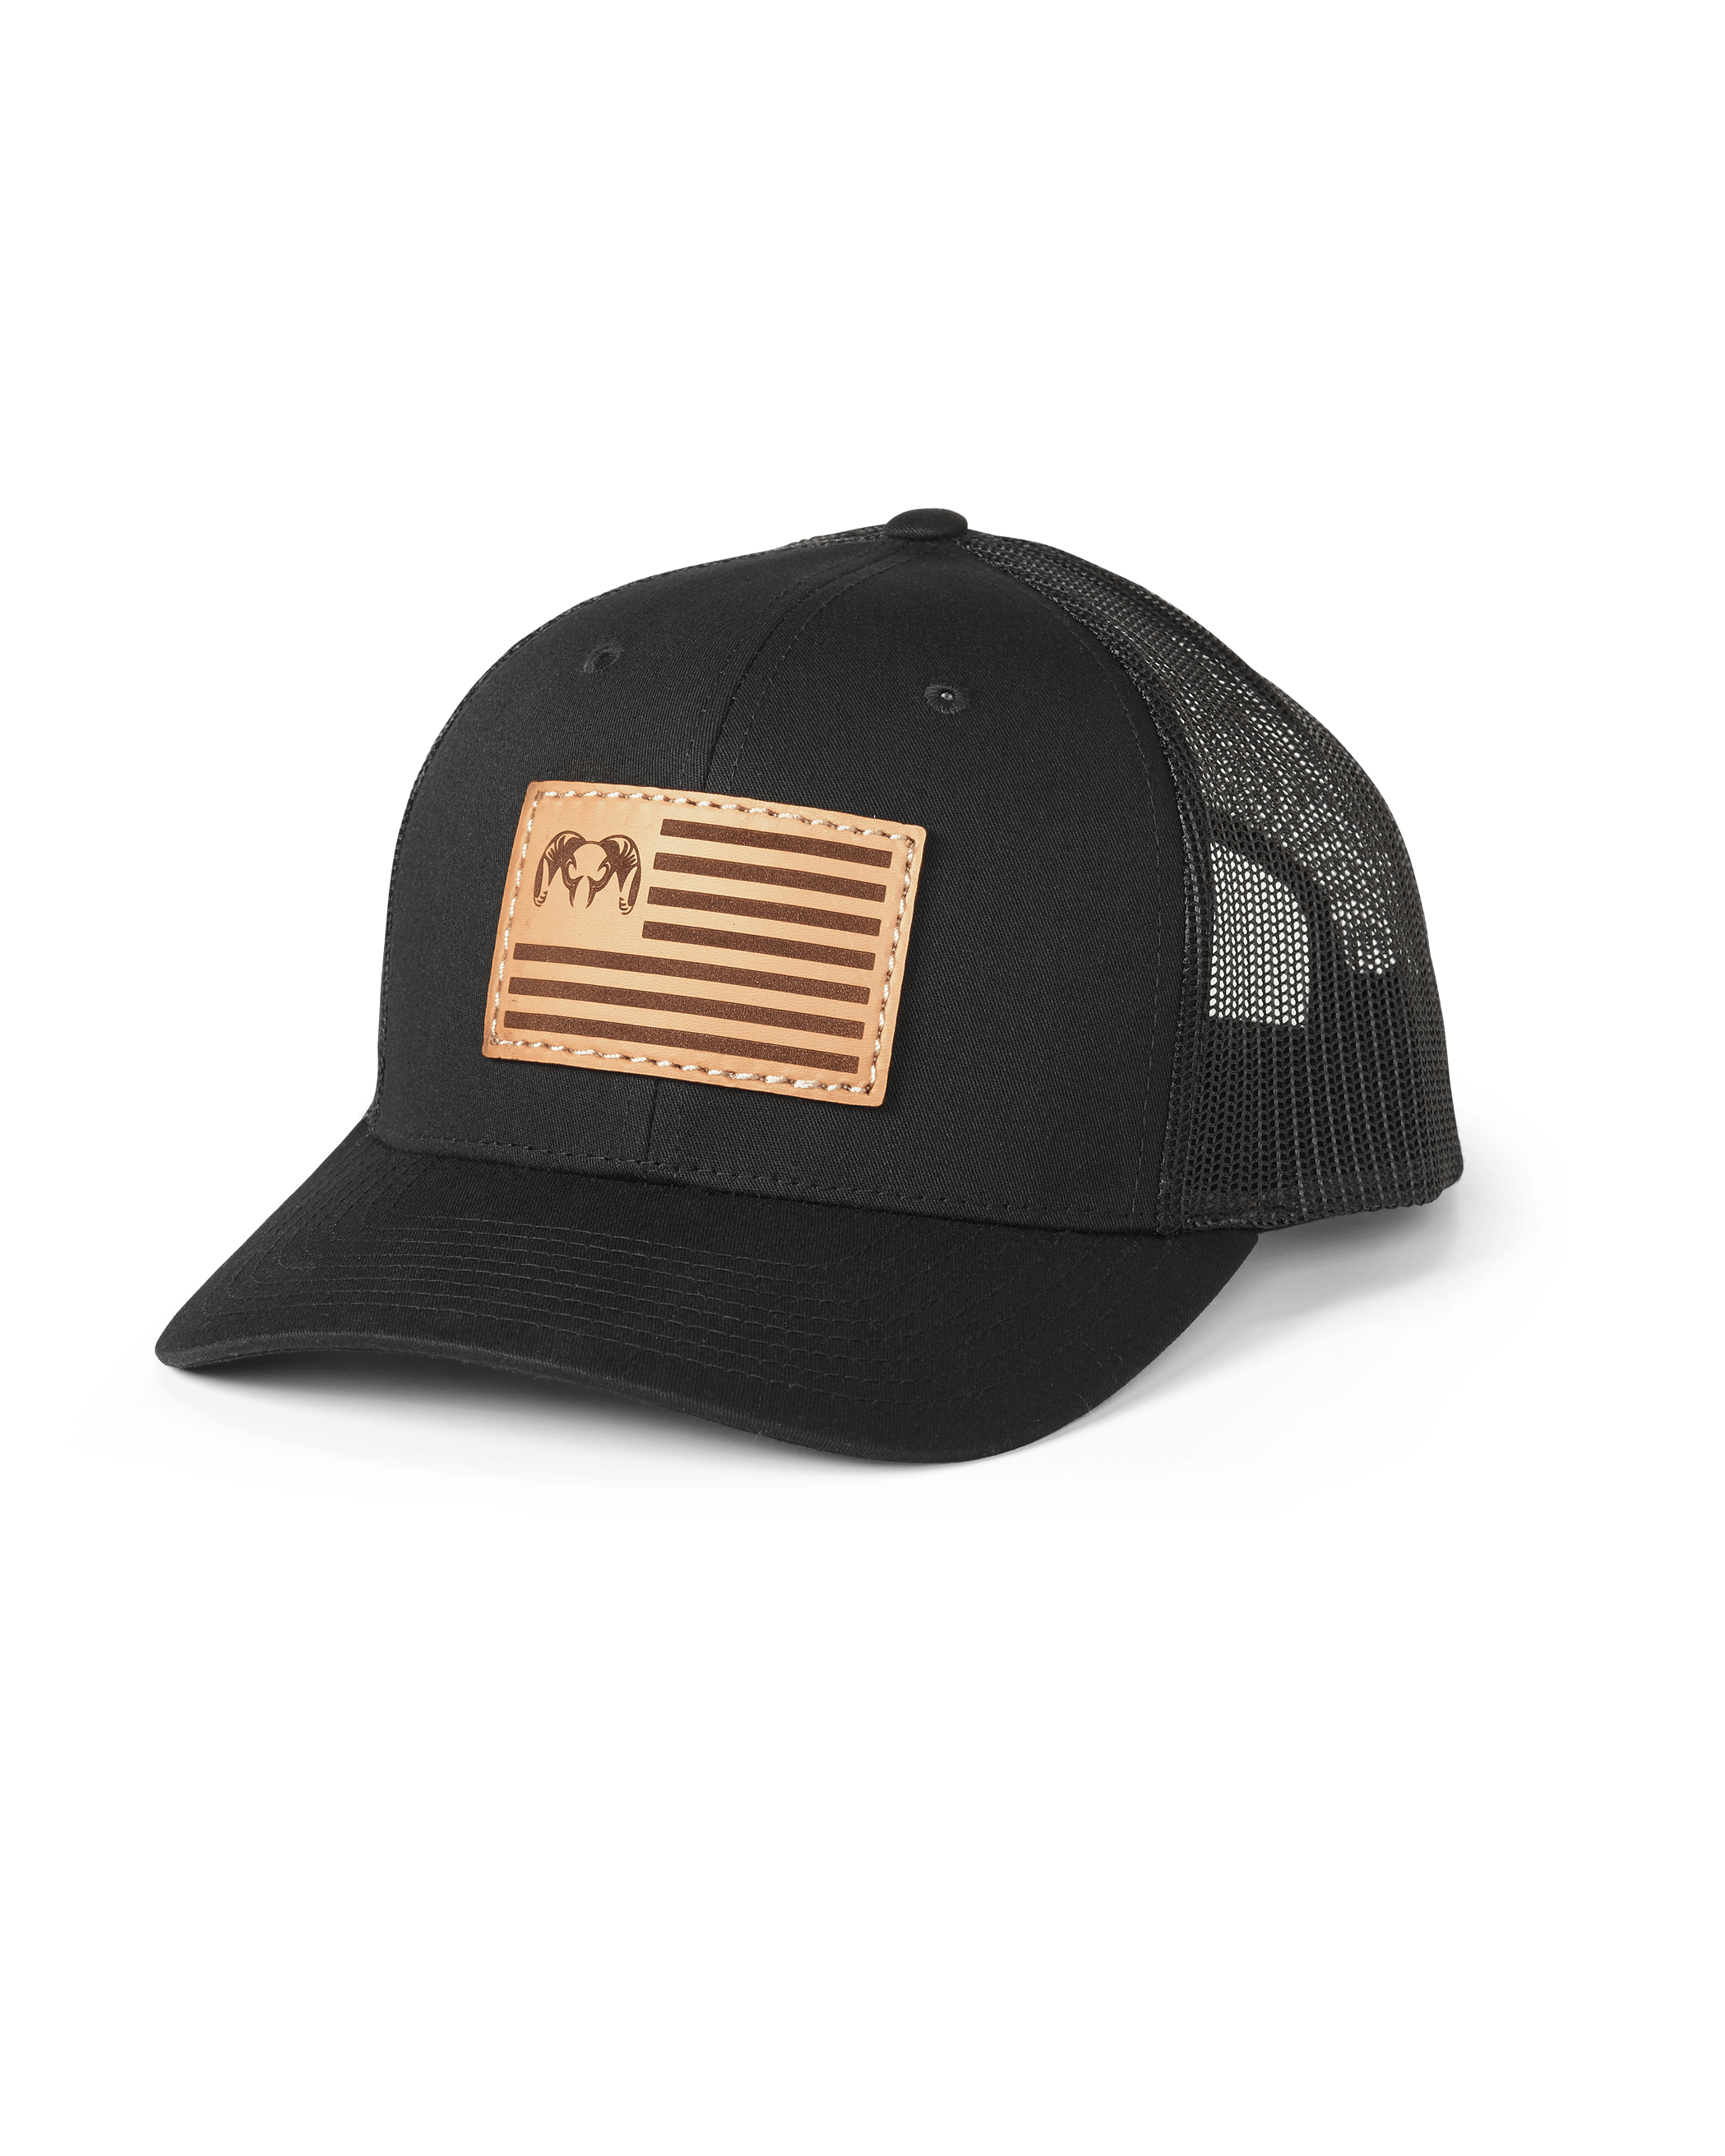 KUIU Patriot Ram Flag Trucker Hat in Black